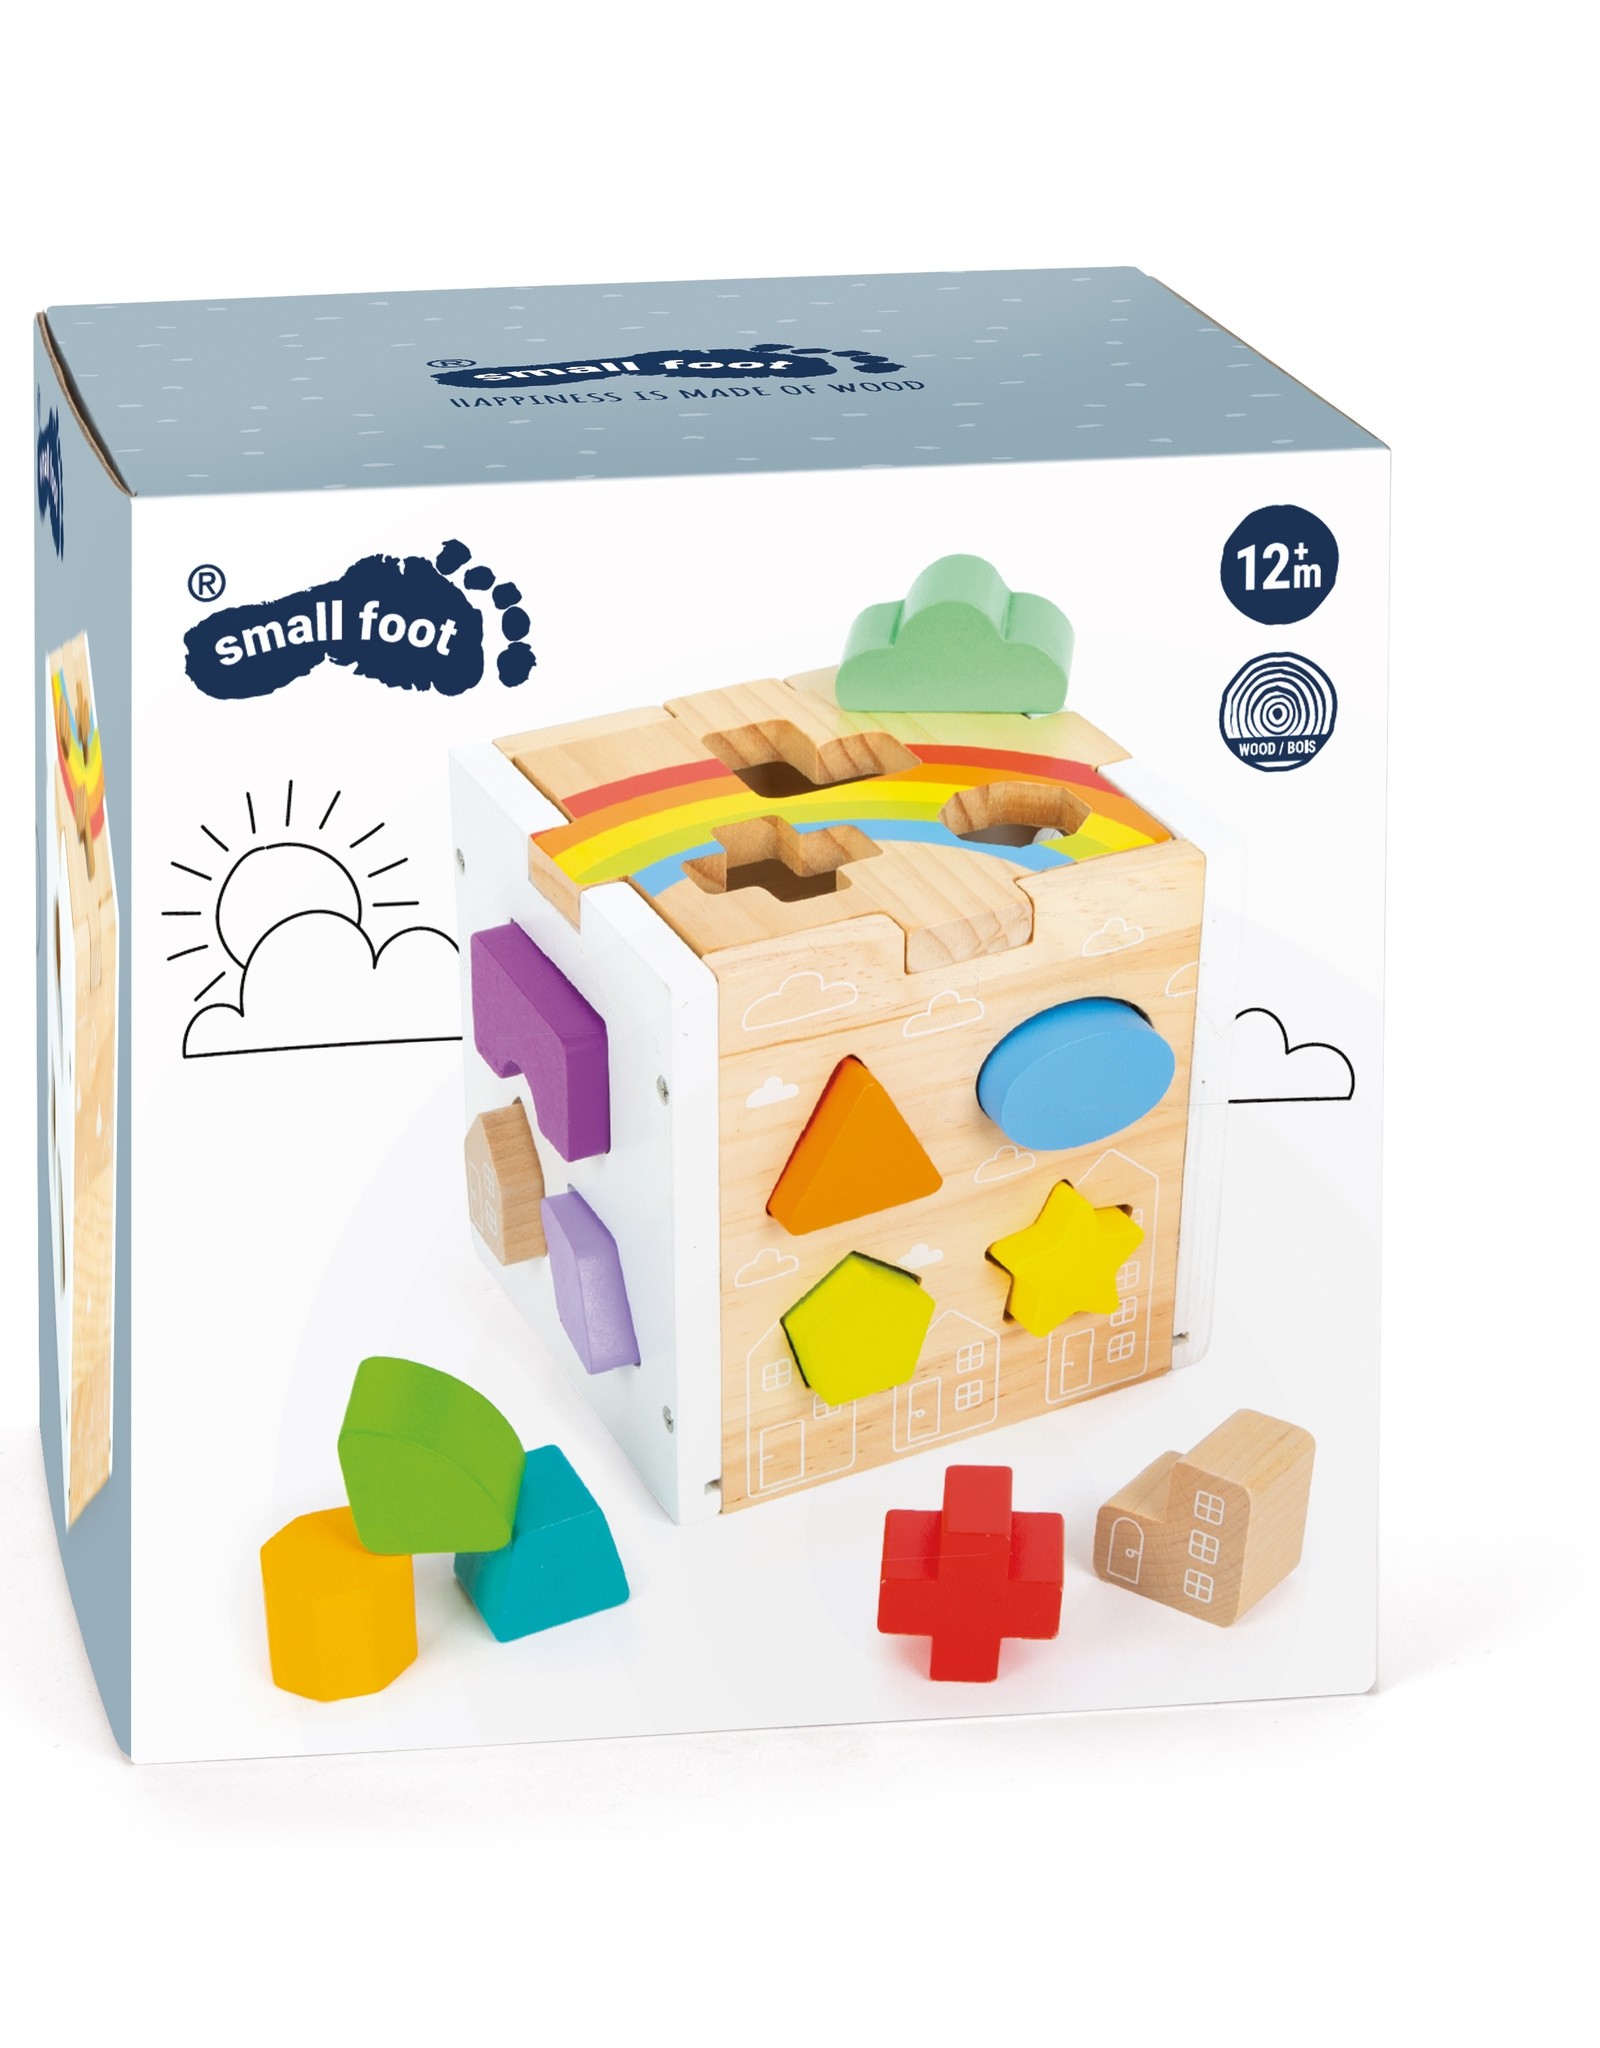 Hauck Toys 11777 Rainbow Shape Sorter Cube Playset